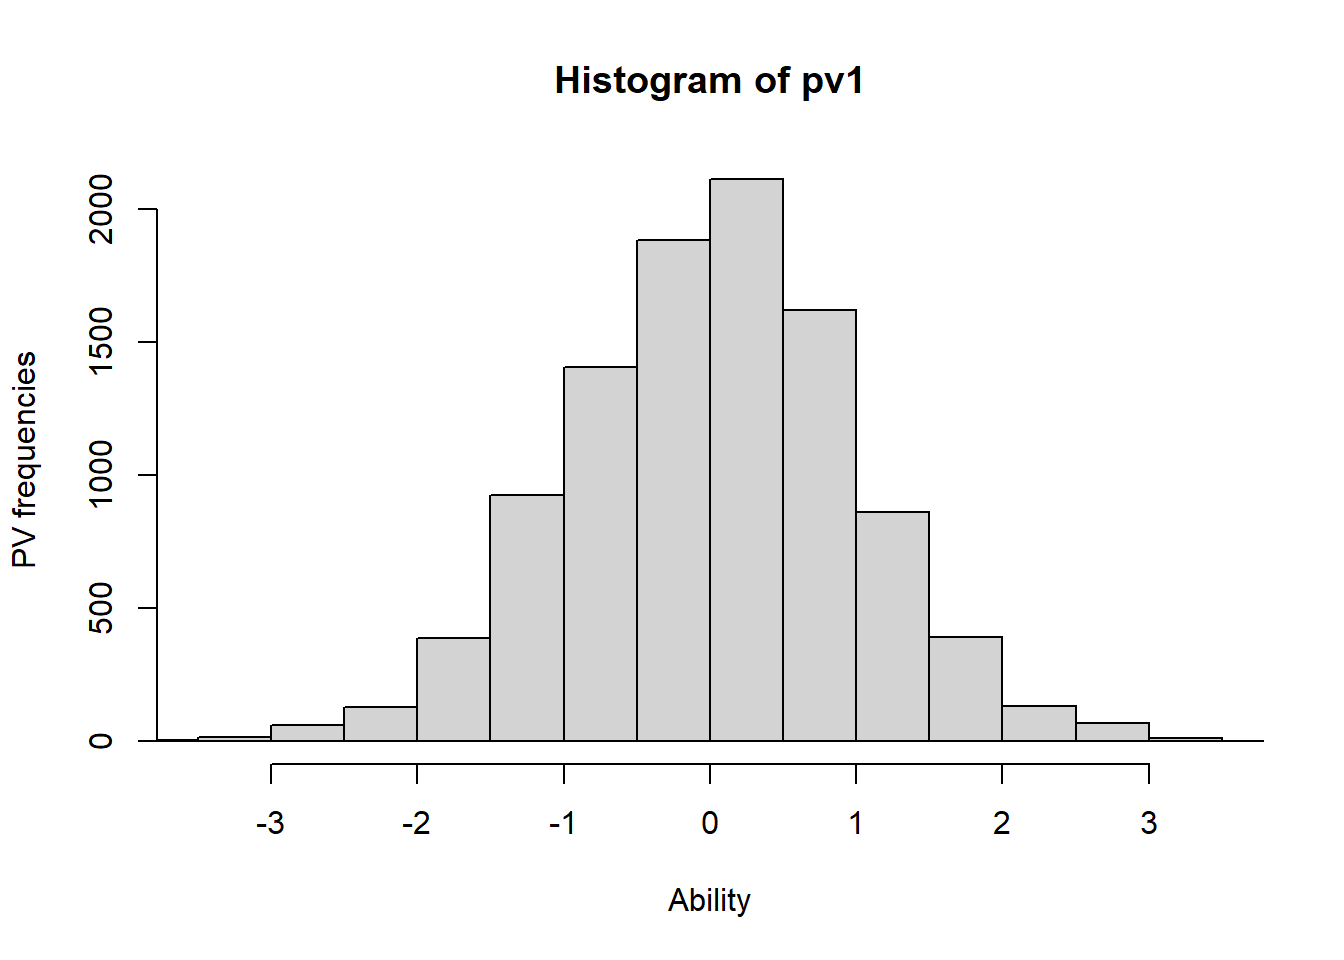 PV ability distribution